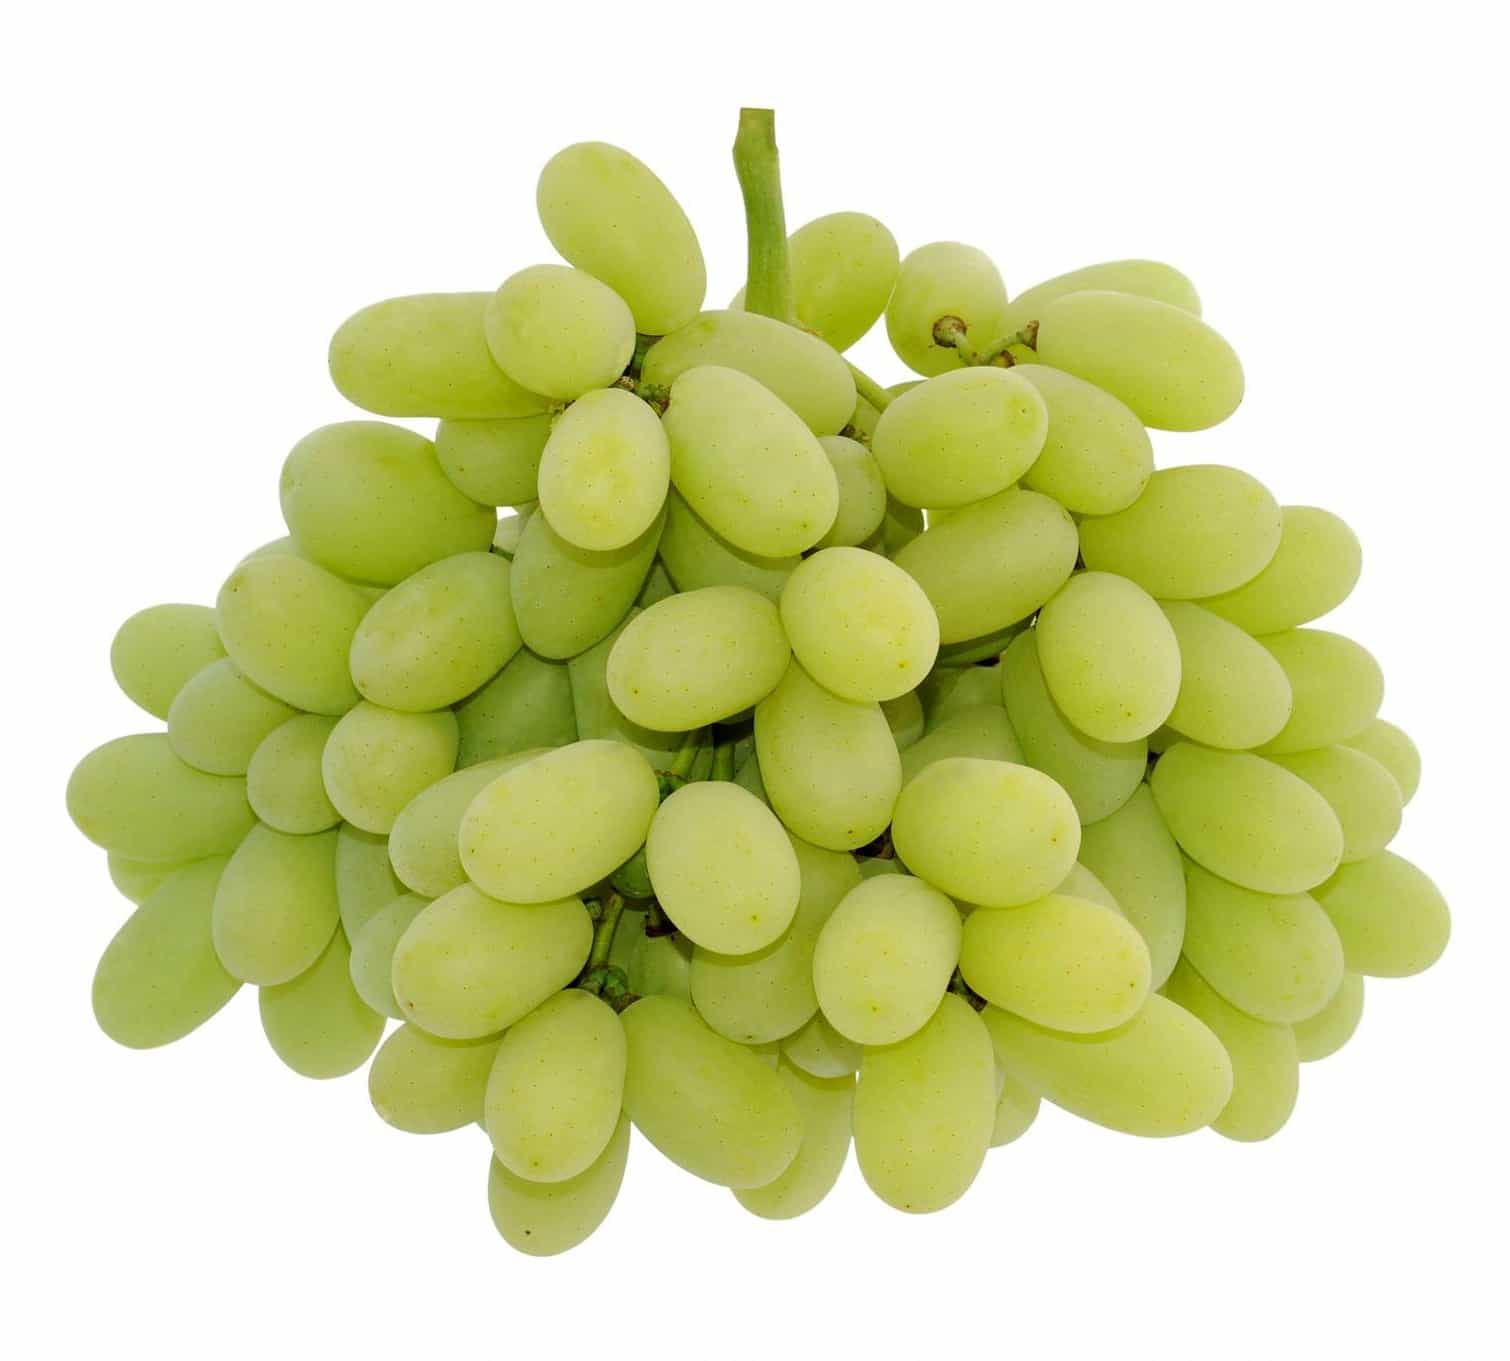 Pristine Grapes from Delano Farms and Four Star Fruit, Delano